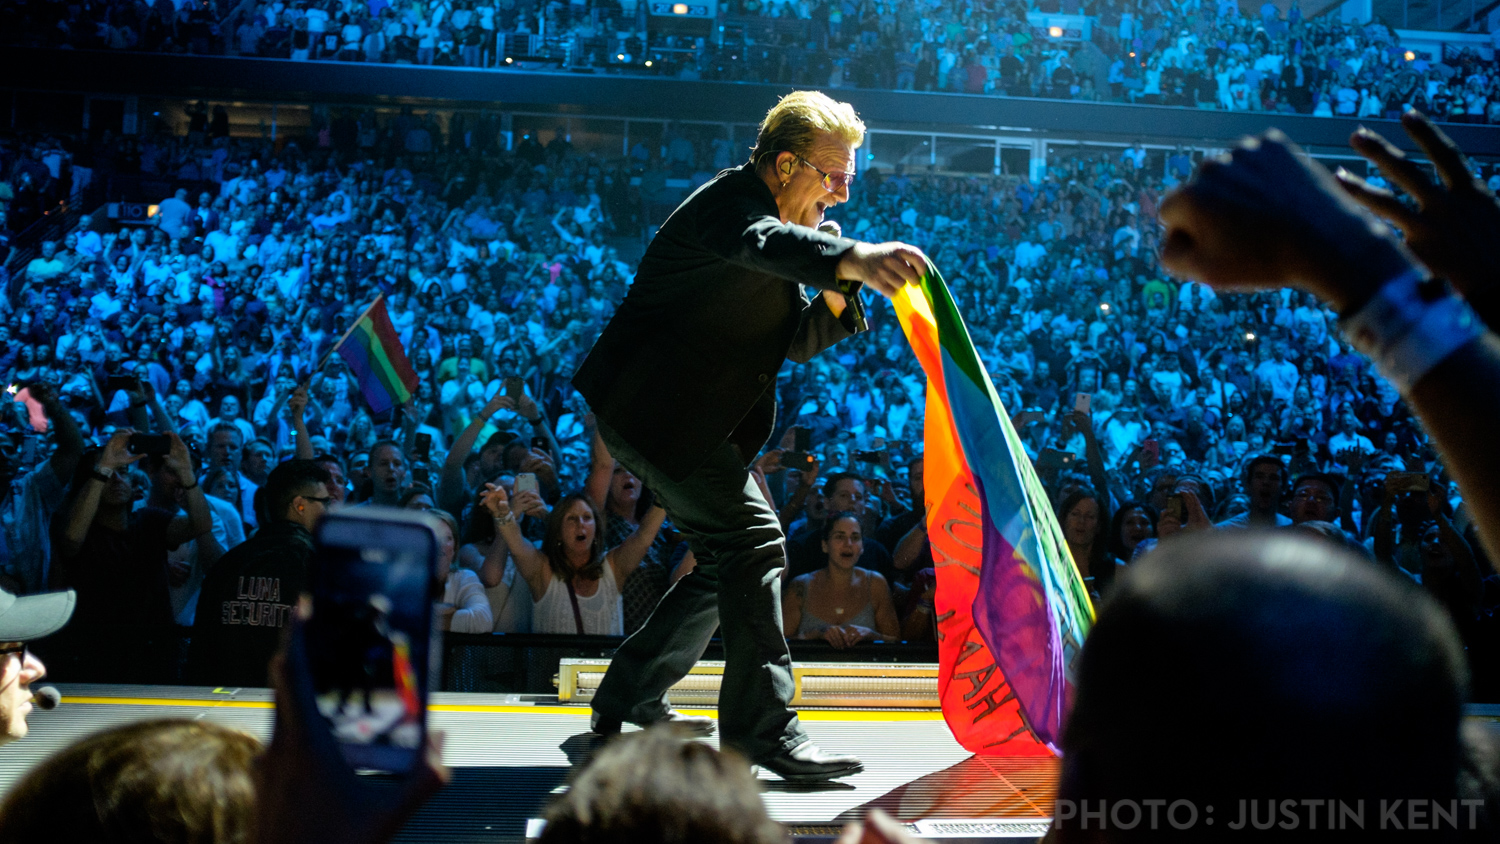 Bono picks up David's flag